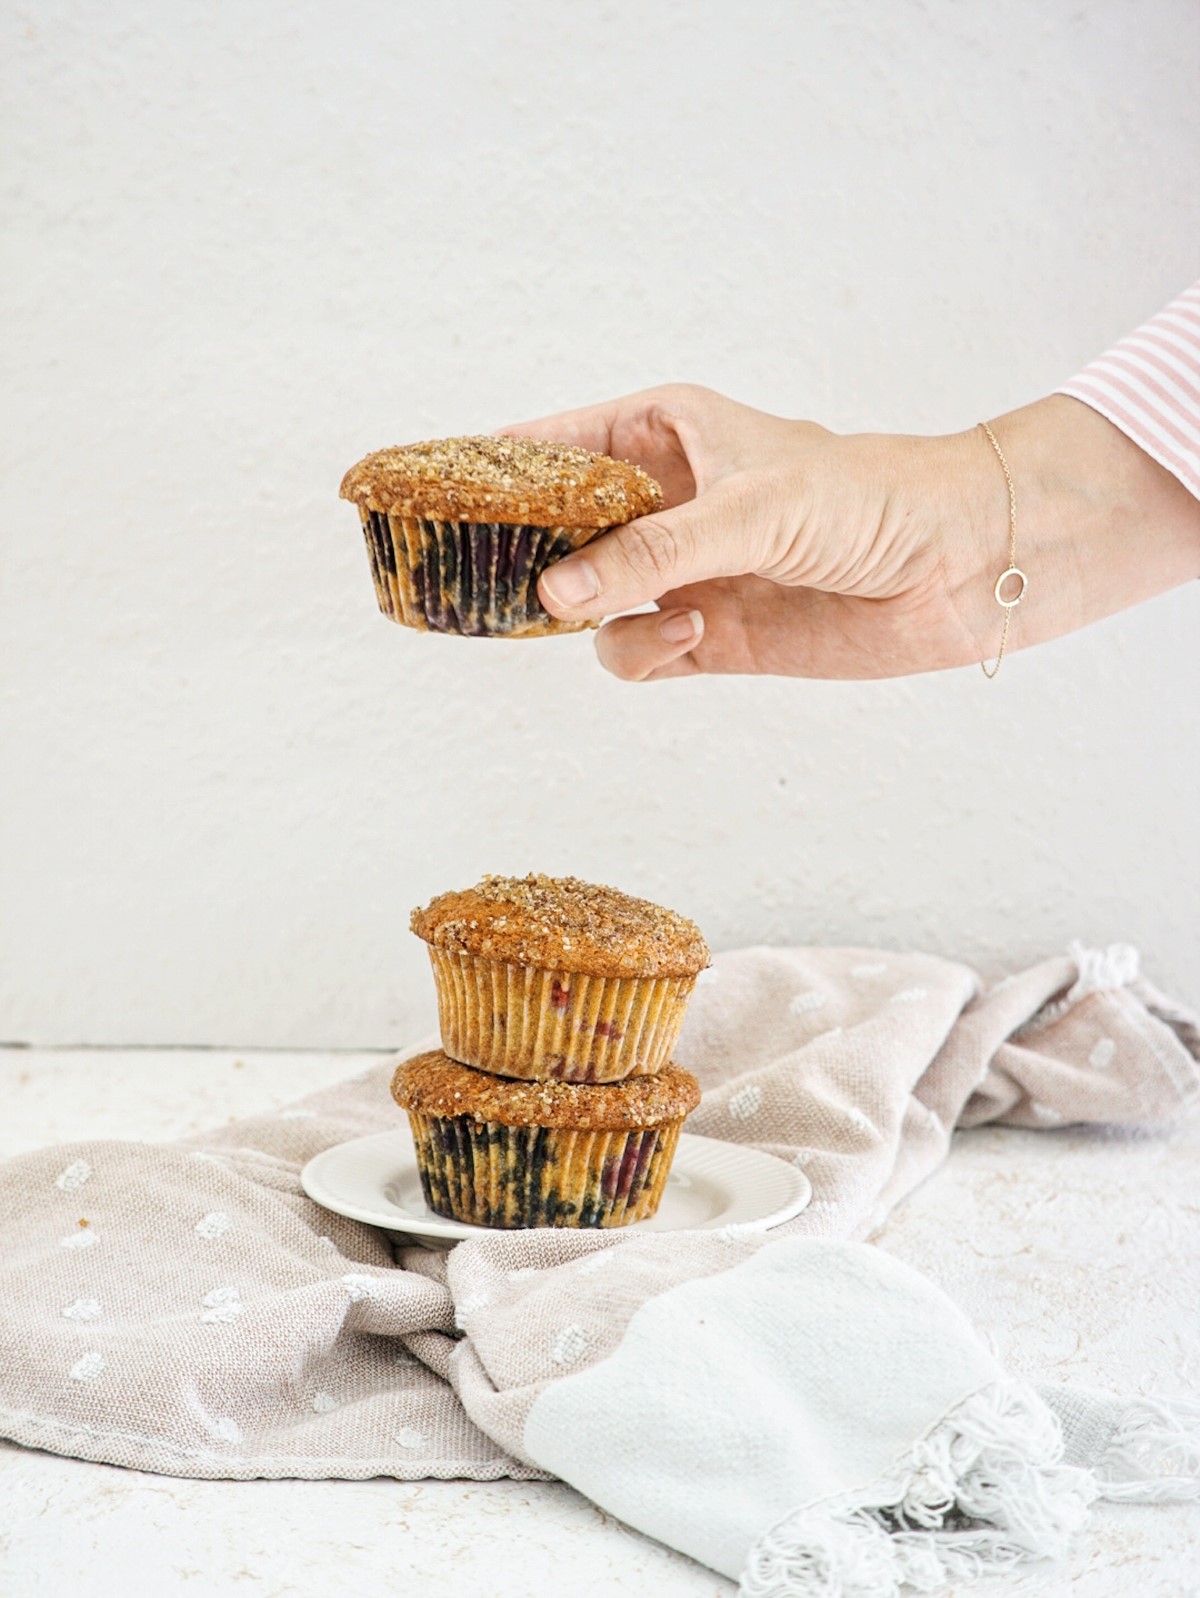 Muffins mit Beeren und Streusel Topping - Title of the Recipe